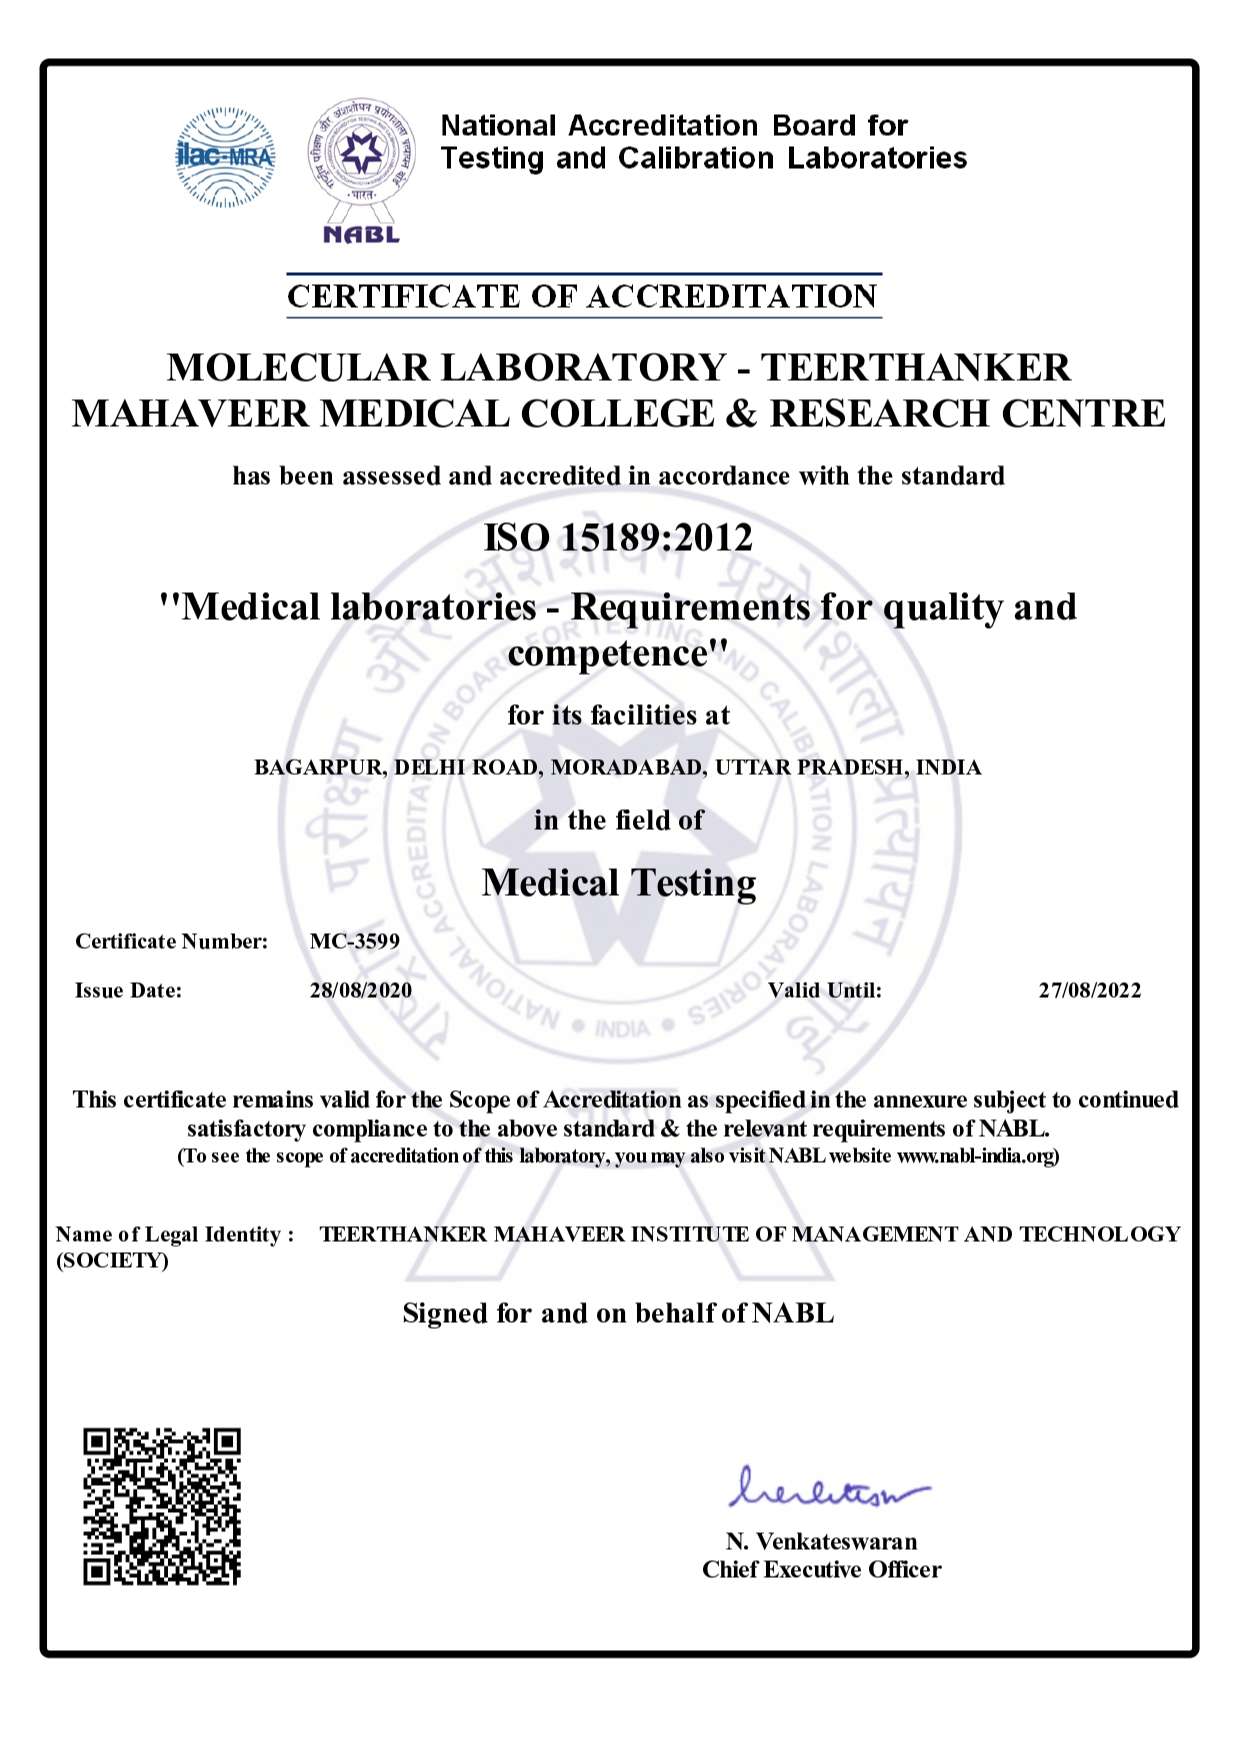 tmu's molecular laboratory certificate